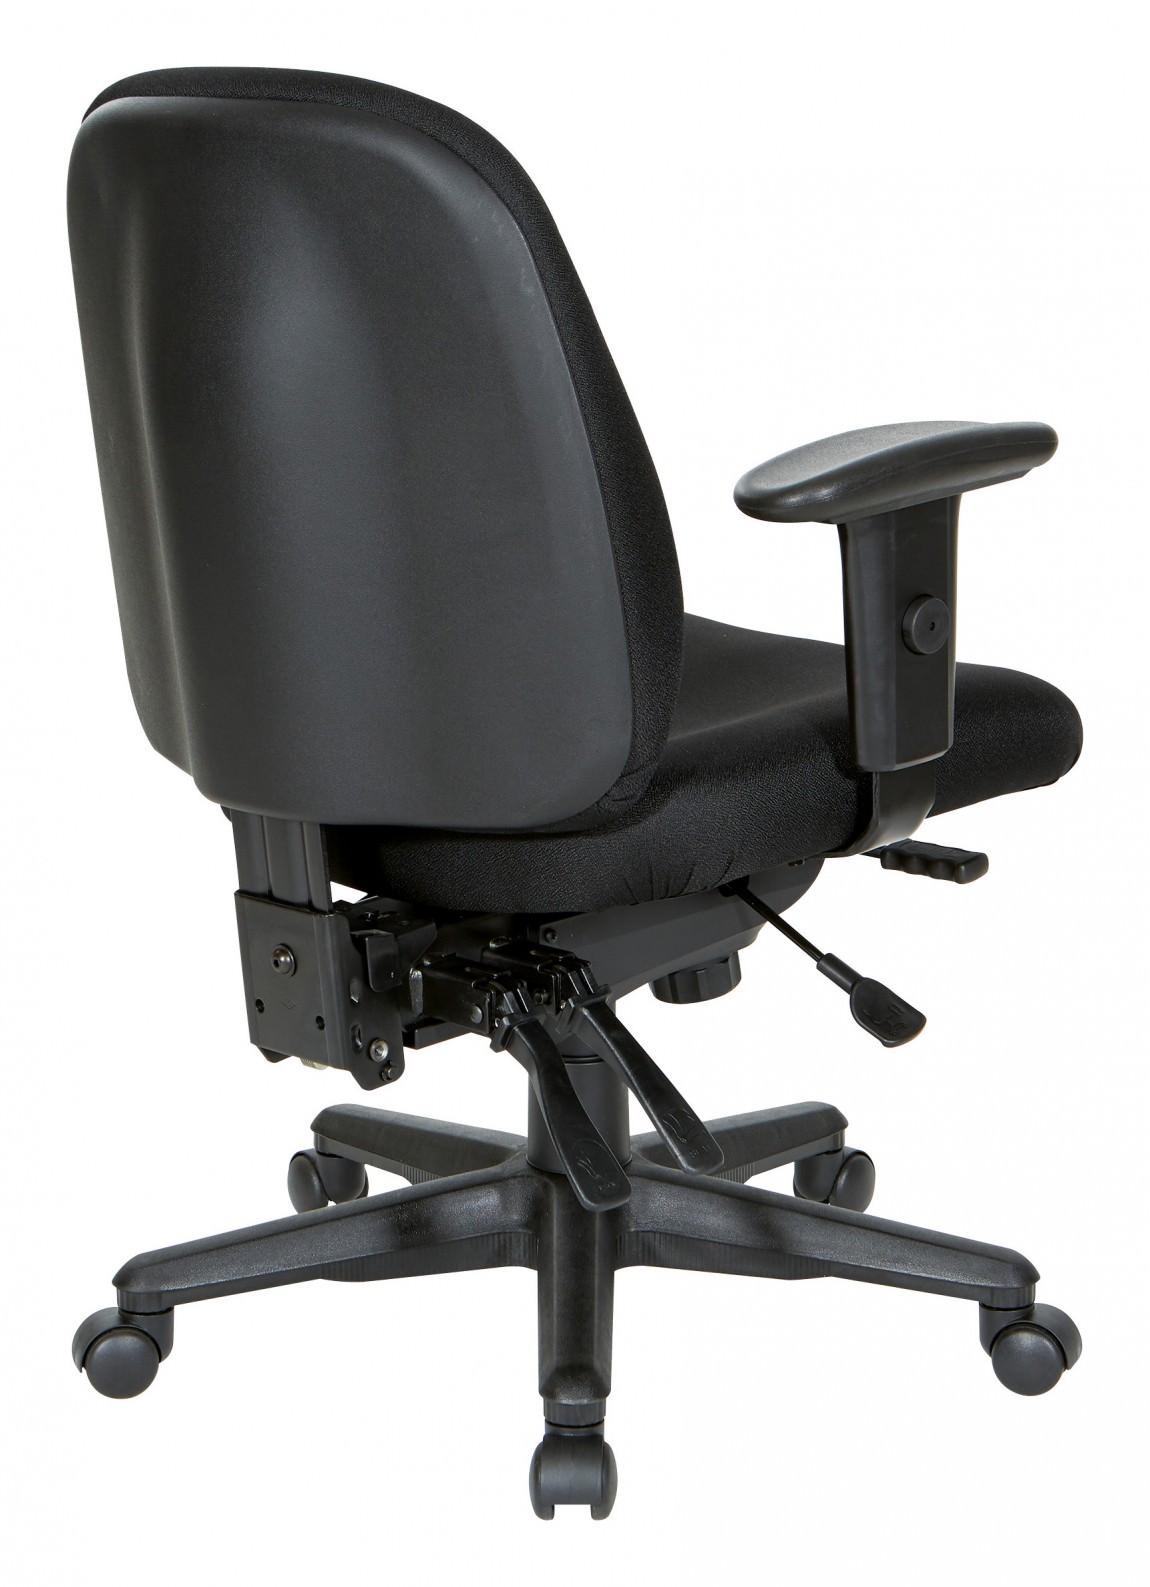 https://madisonliquidators.com/images/p/1150/25964-mid-back-ergonomic-office-chair-3.jpg